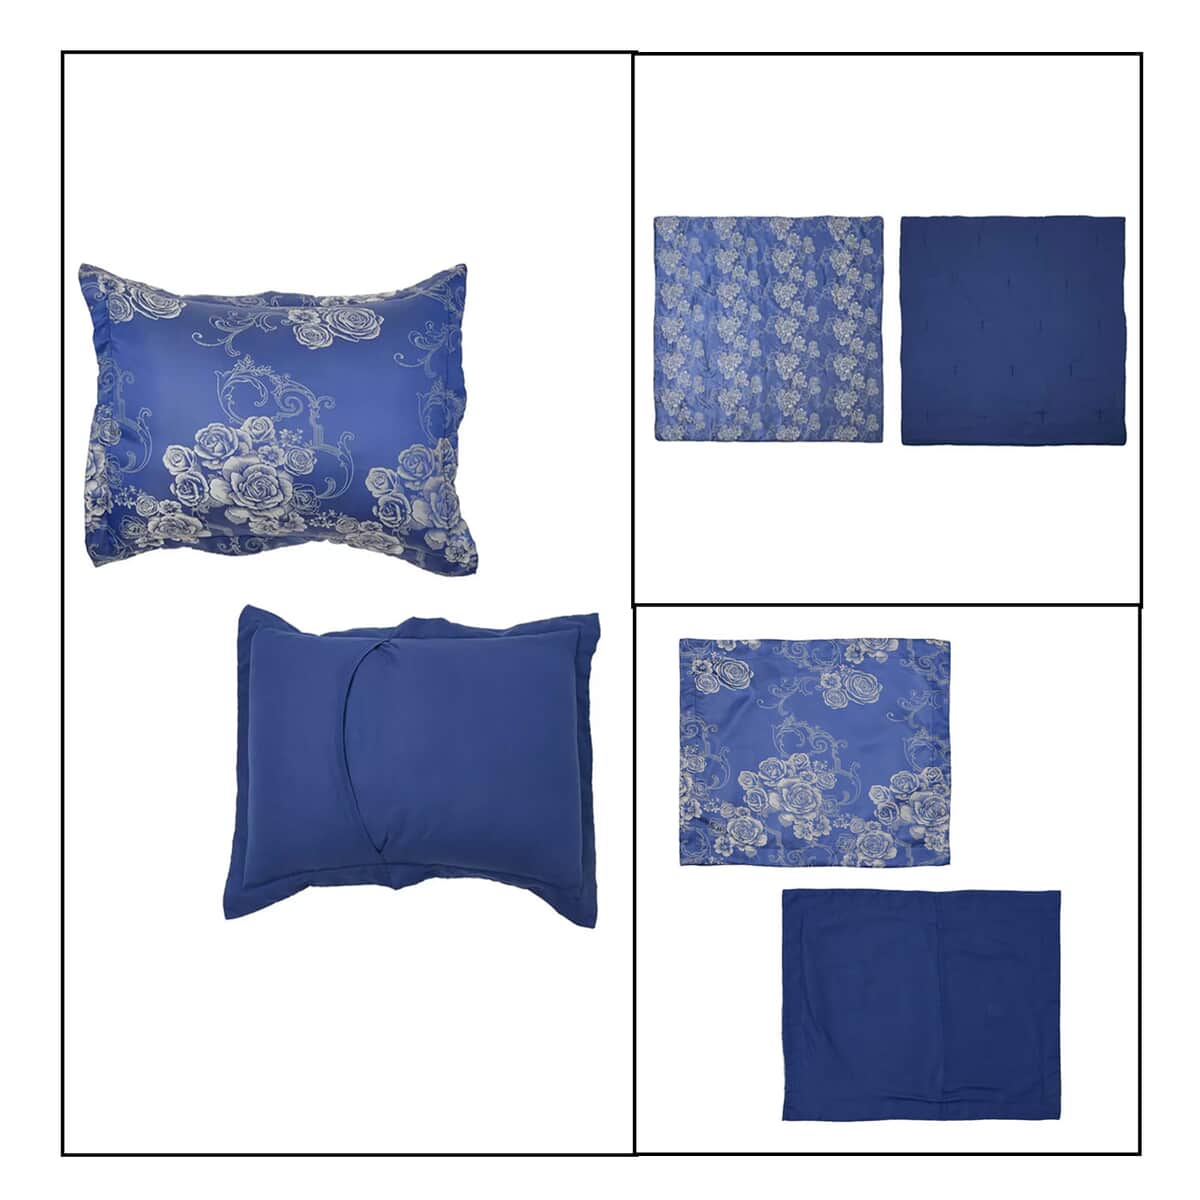 Homesmart Blue Satin Jacquard Damask Pattern Comforter Set - 1 Comforter and 2 Pillowcases (Queen Size) image number 6